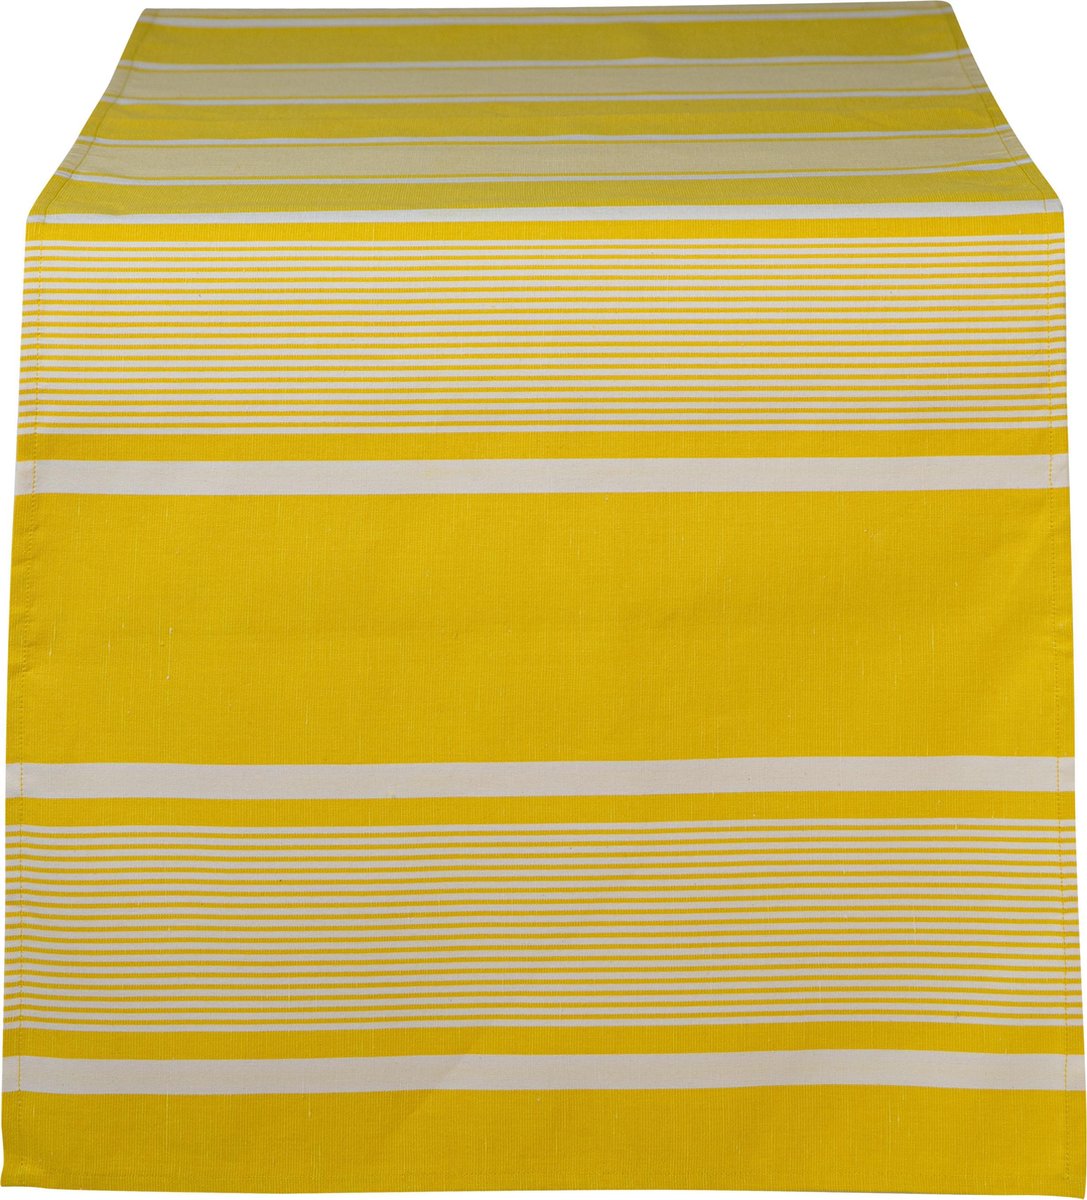 kleurmeester.nl | Afwasbare tafelloper Yvonne - Katoen-linnen | 50 cm x 155 cm | geel wit gestreept